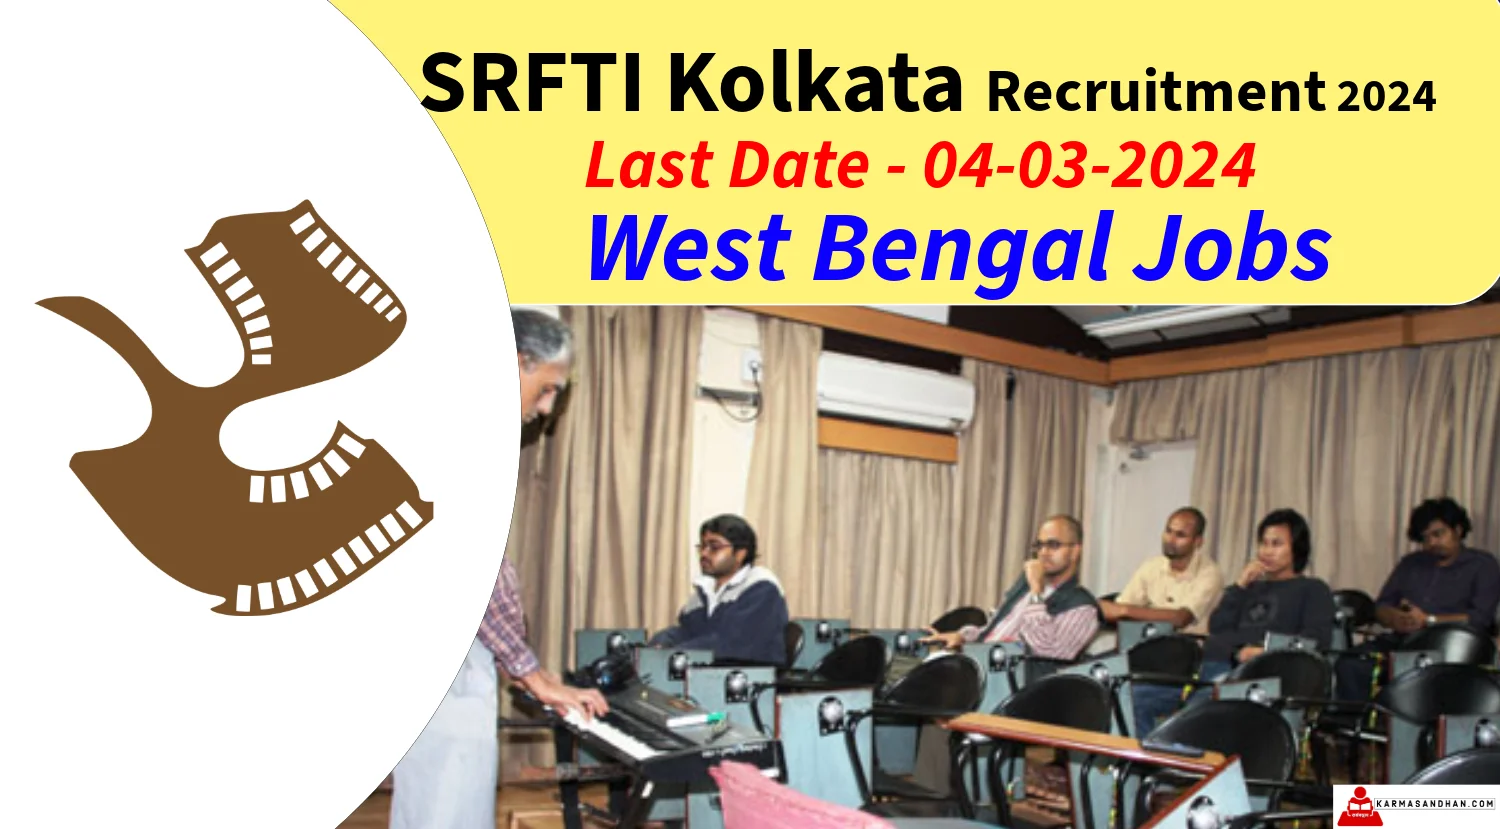 SRFTI Kolkata Recruitment 2024 Notification out